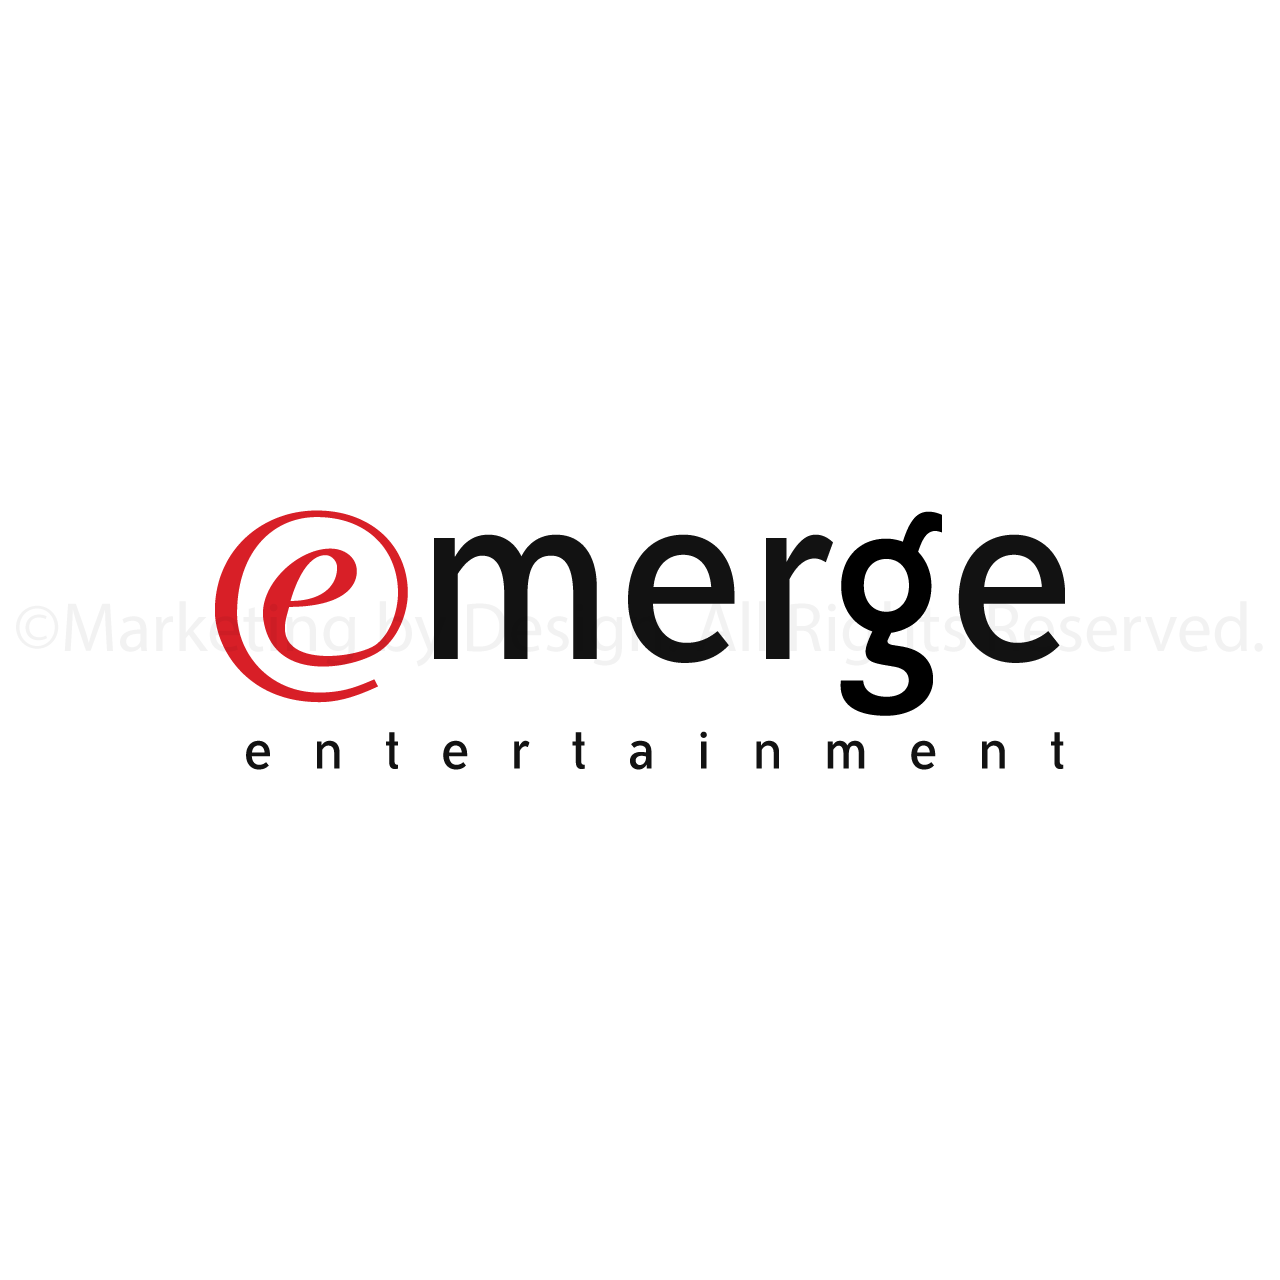 Marketing by Design | Portfolio: Emerge Entertainment Logo